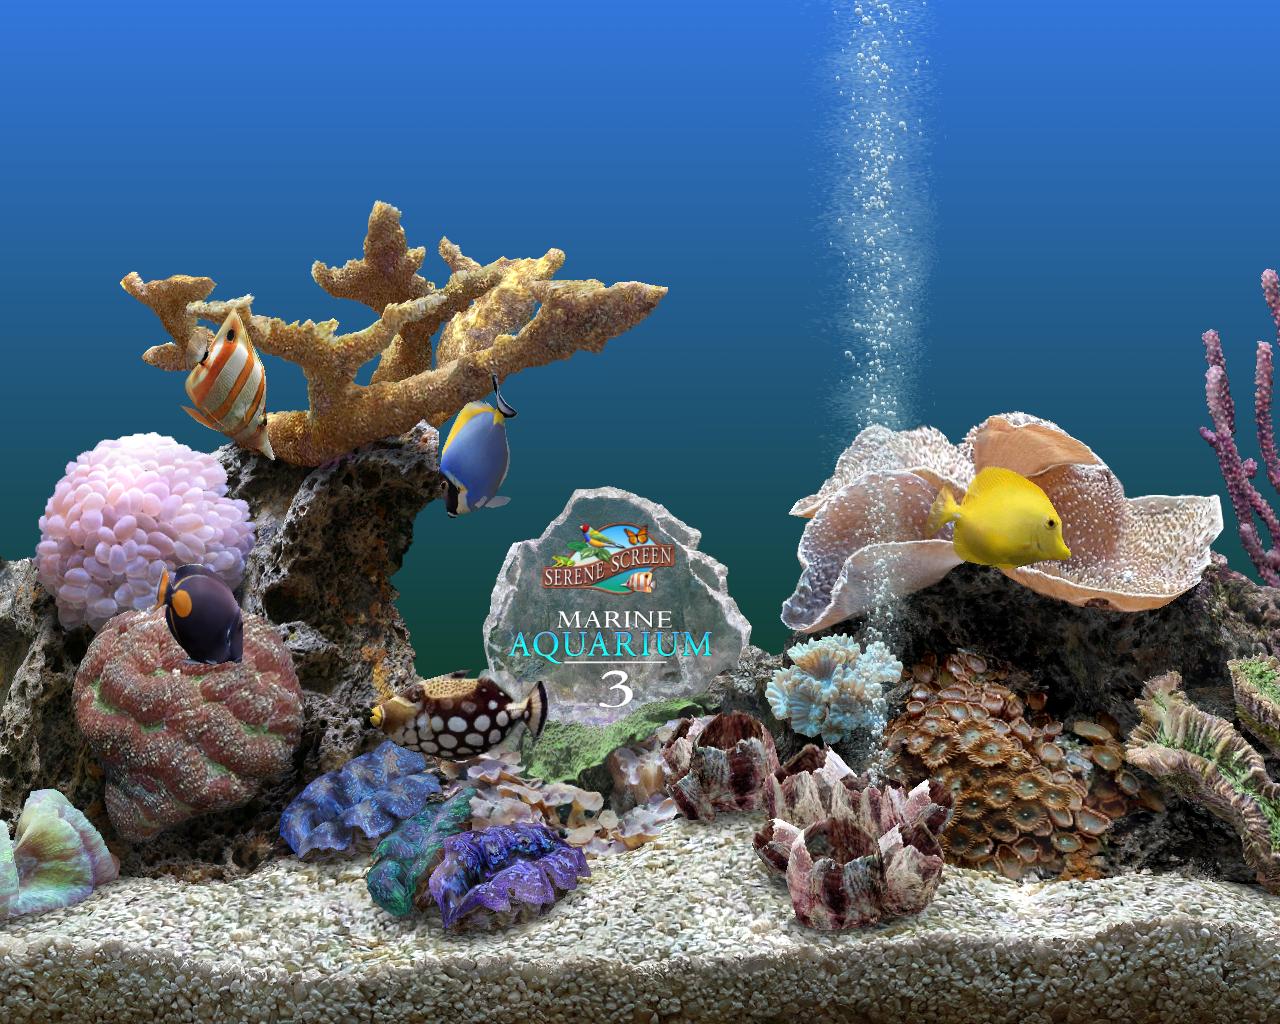 marine aquarium screensaver 3.3 keycode